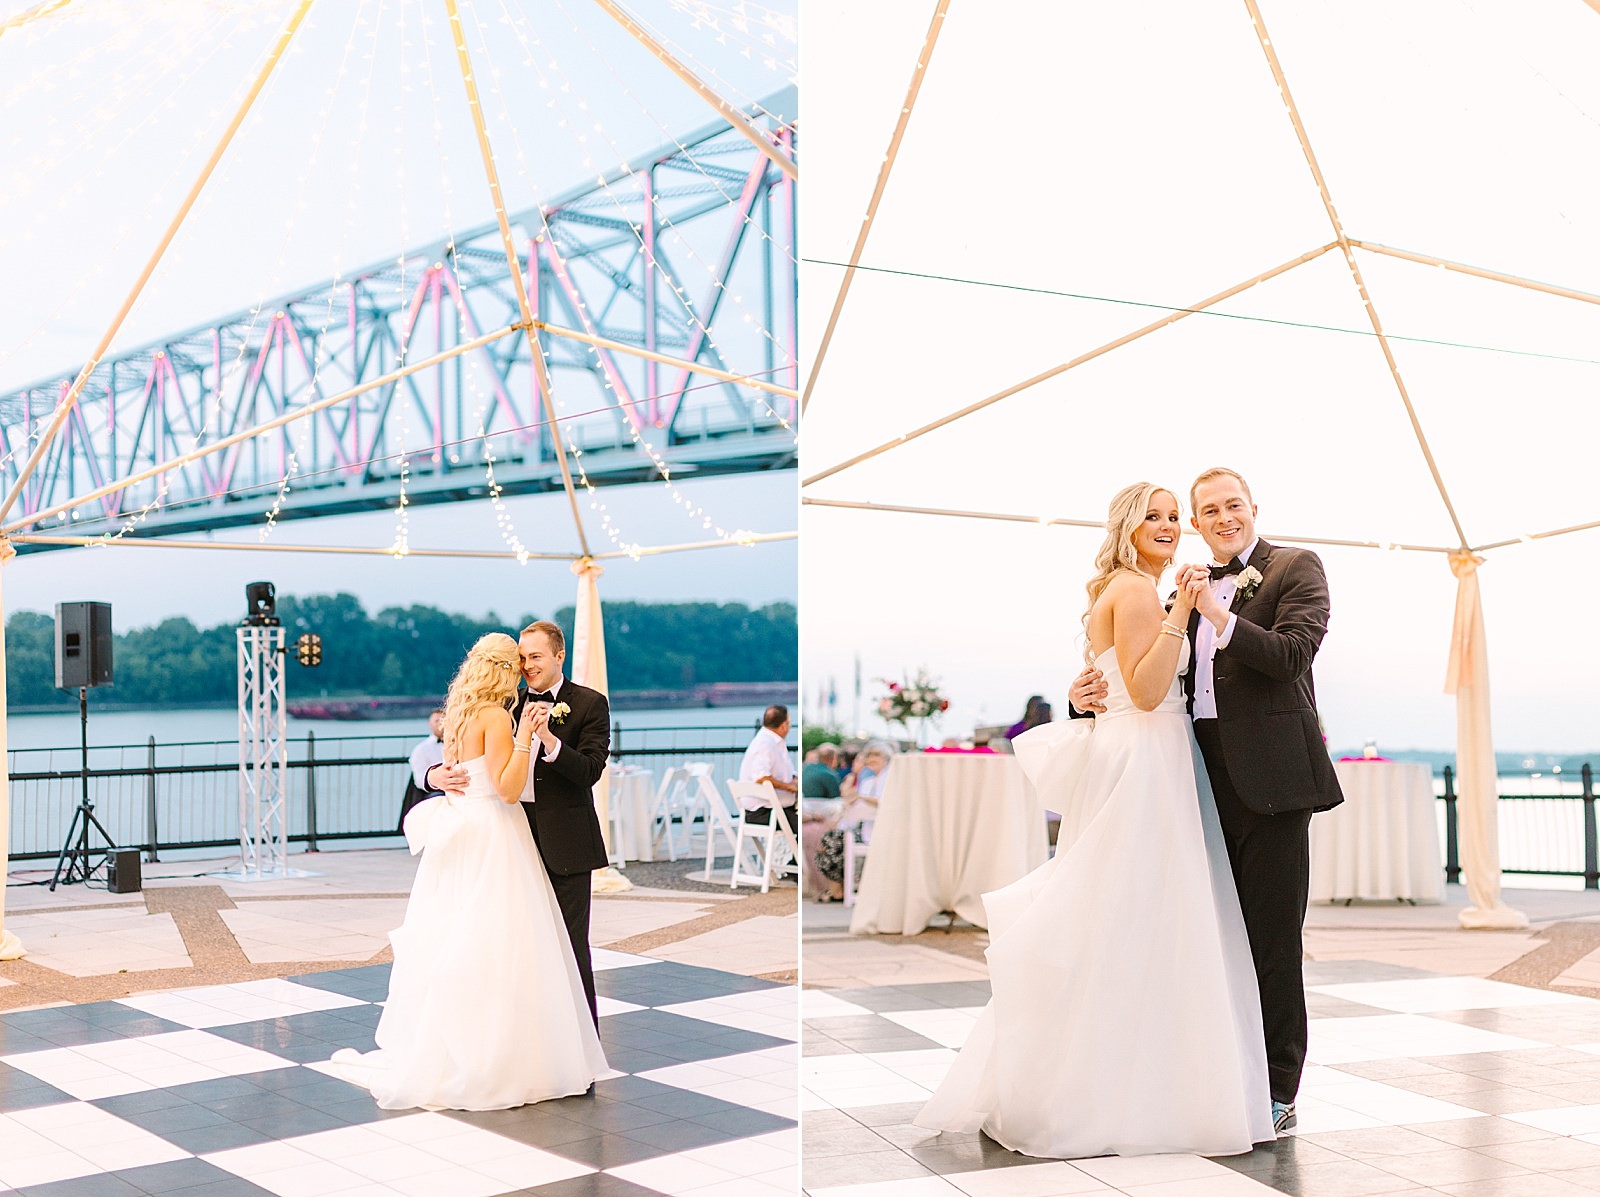 A Downtown Owensboro Wedding at River Park Center | Kaitlin & Justin152.jpg